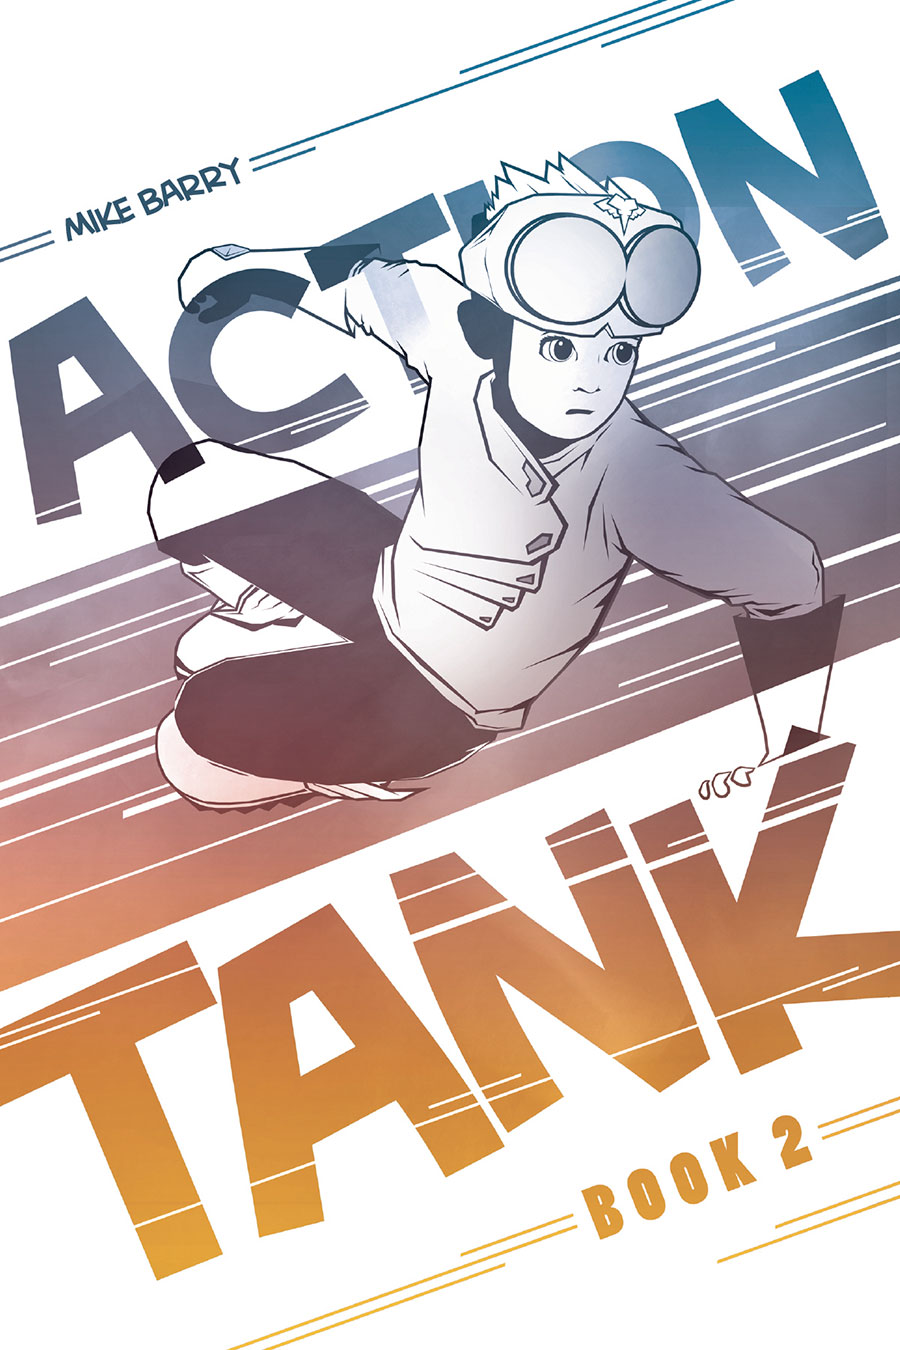 Action Tank Vol 2 TP